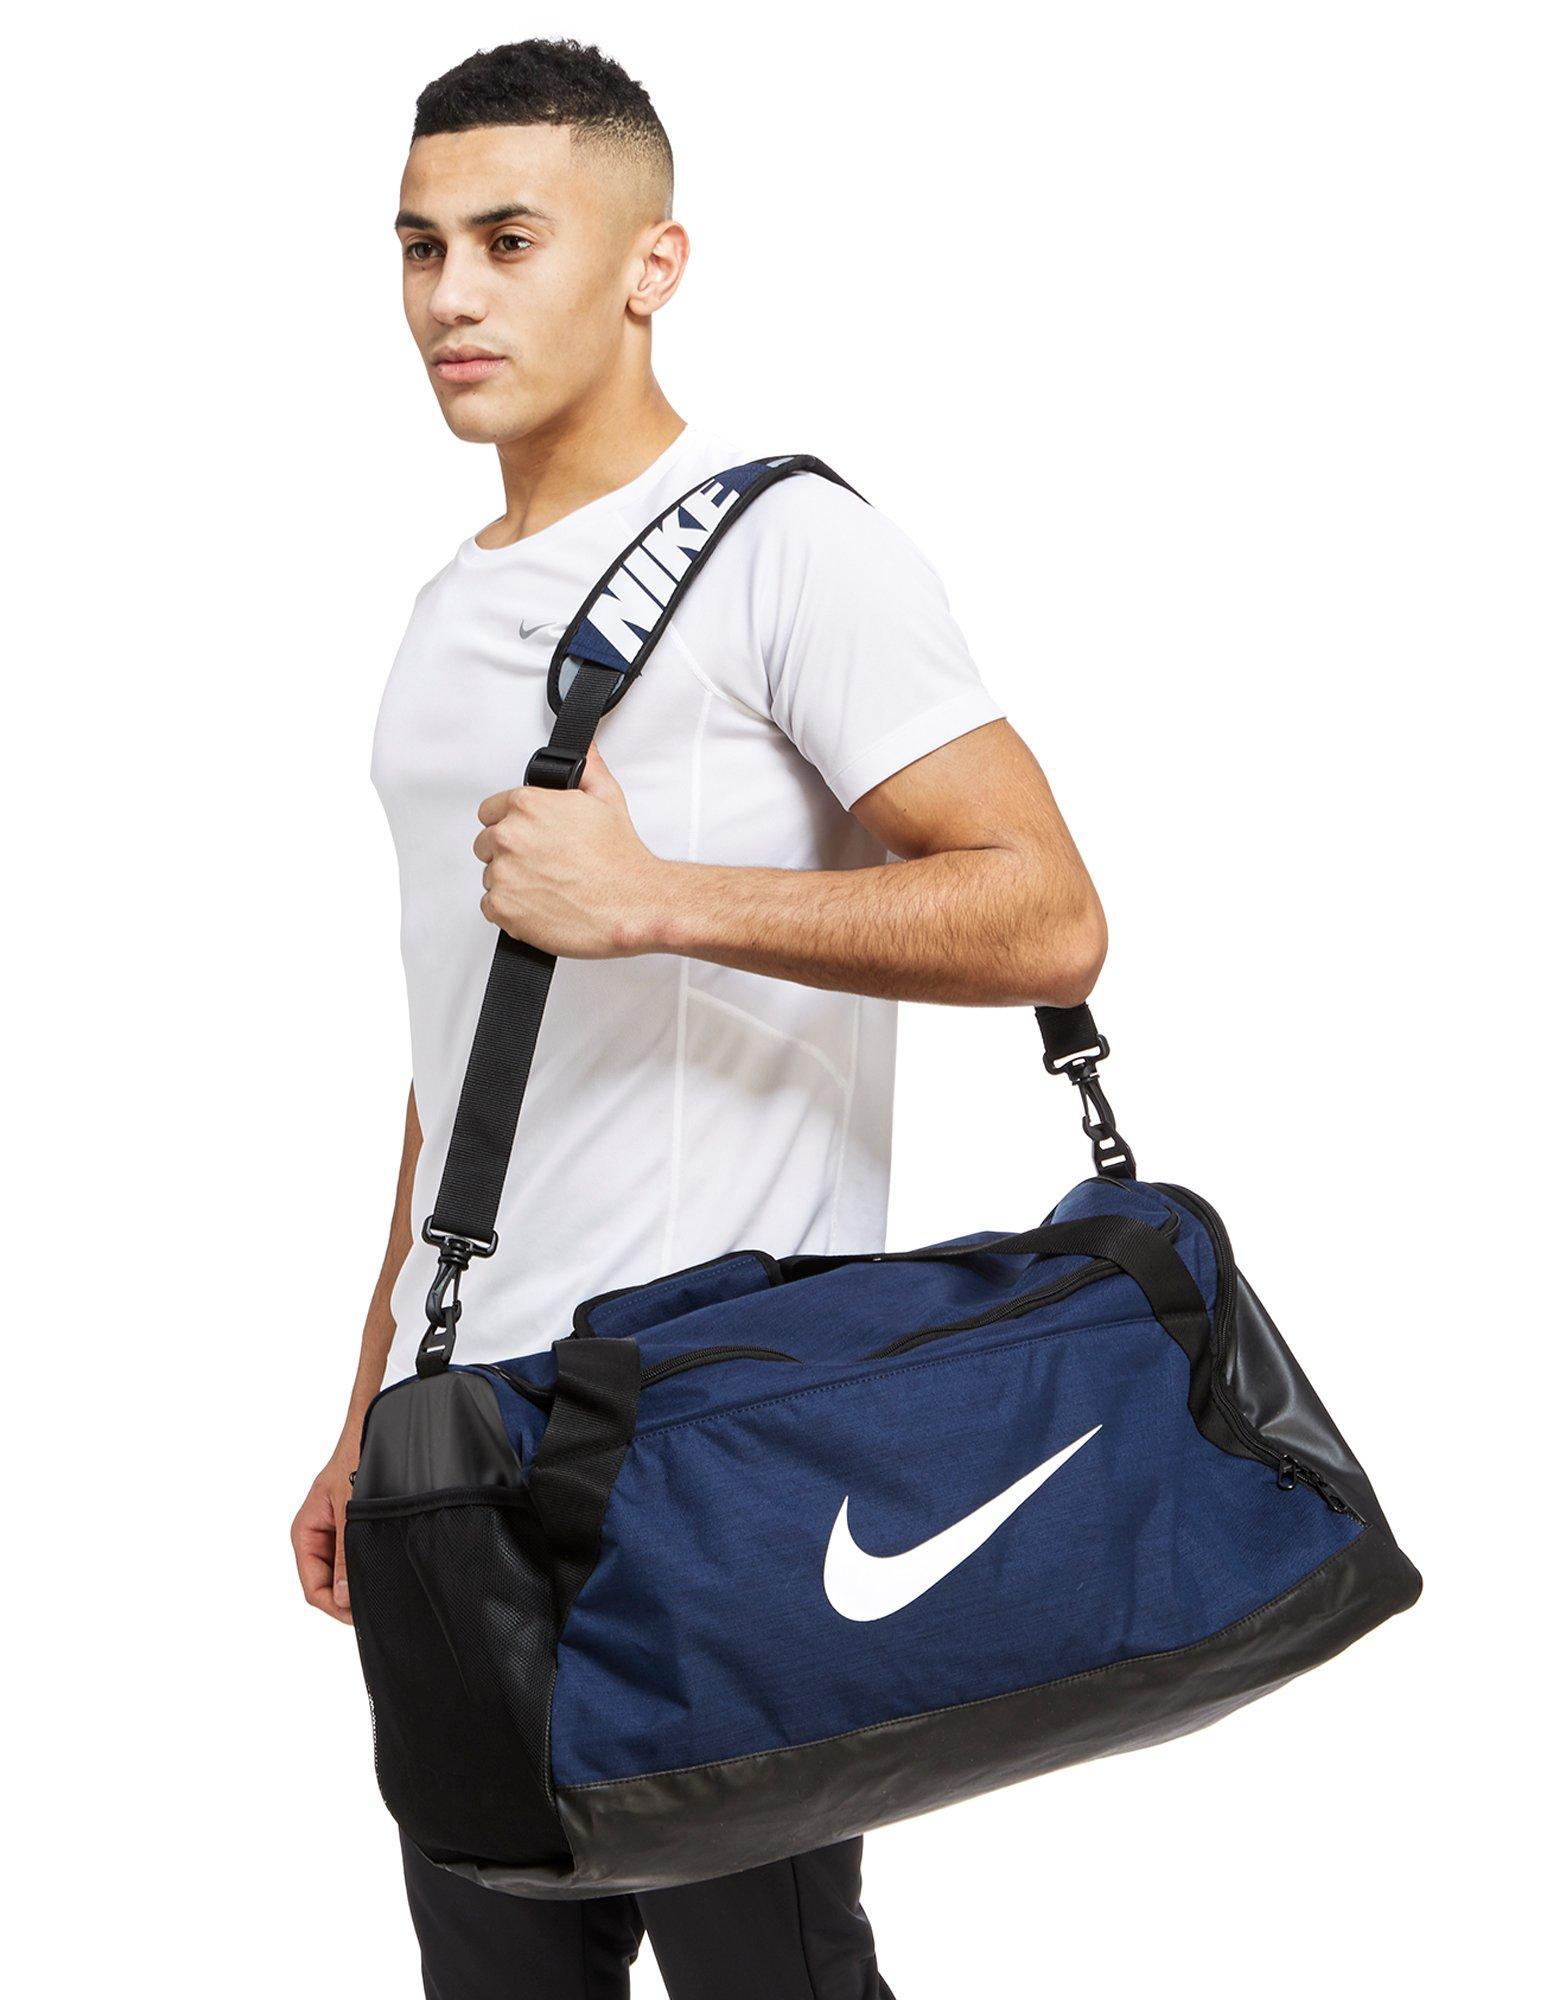 Nike Synthetic Brasilia Medium Duffle Bag in Navy (Blue) for Men - Lyst